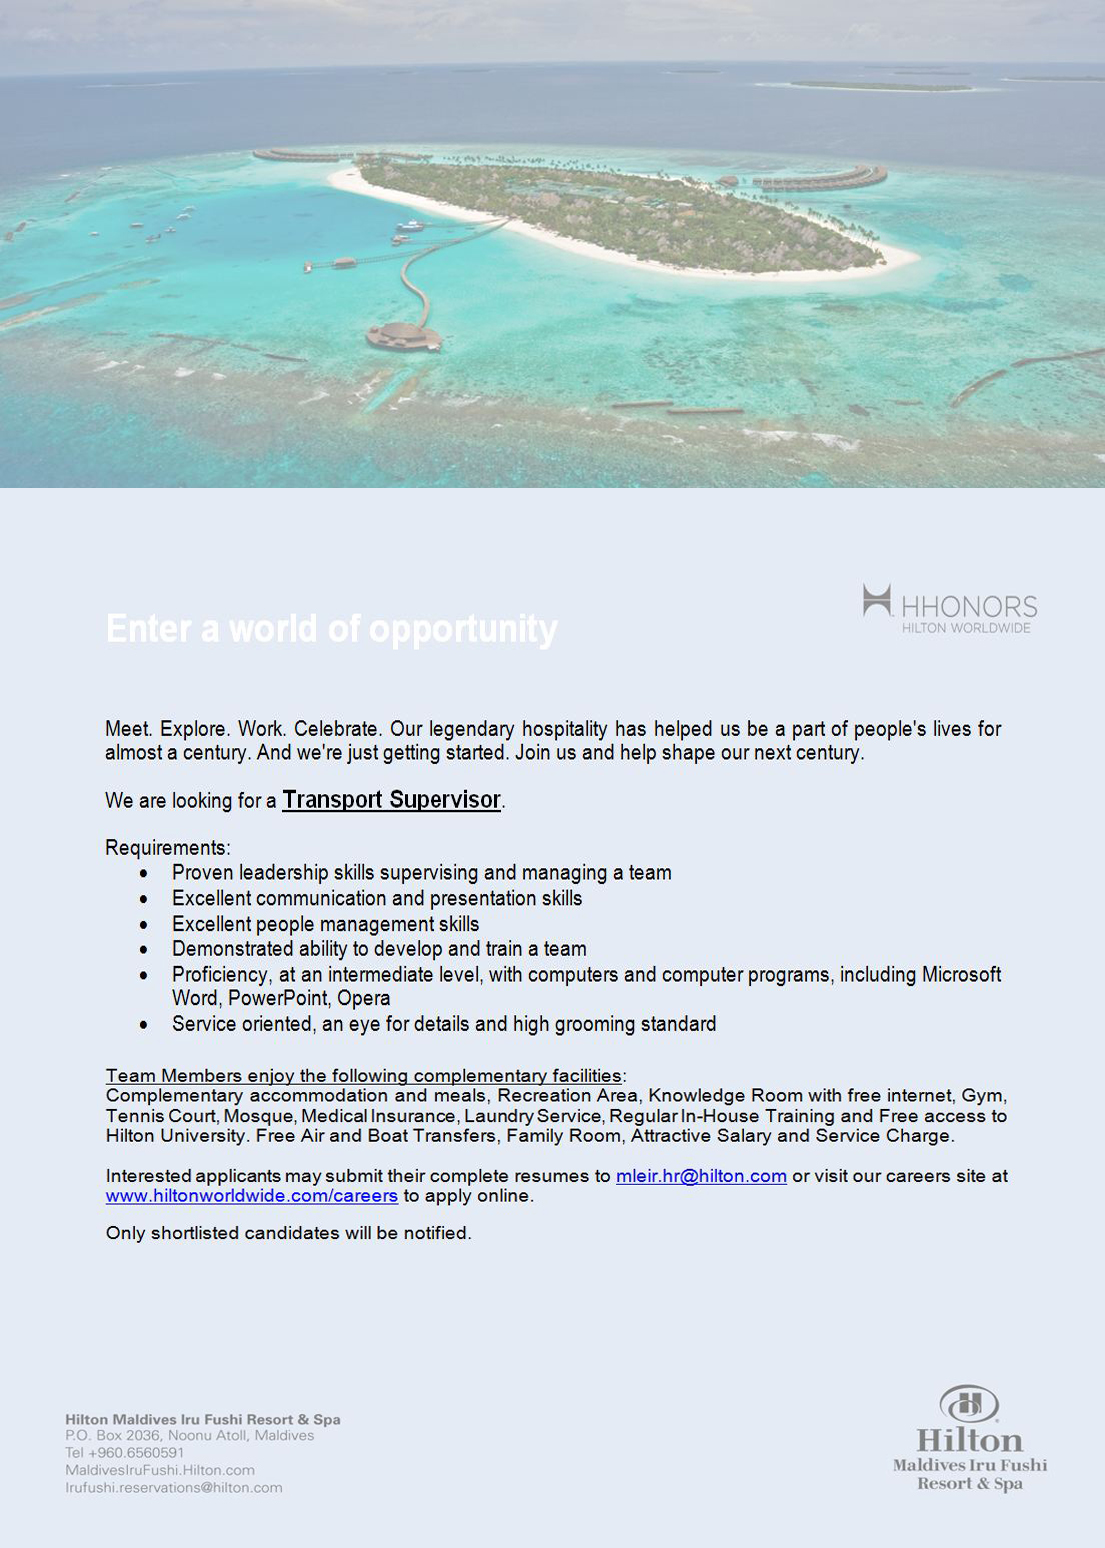 Transport Supervisor Job Vacancy at Hilton Maldives Hilton+advert